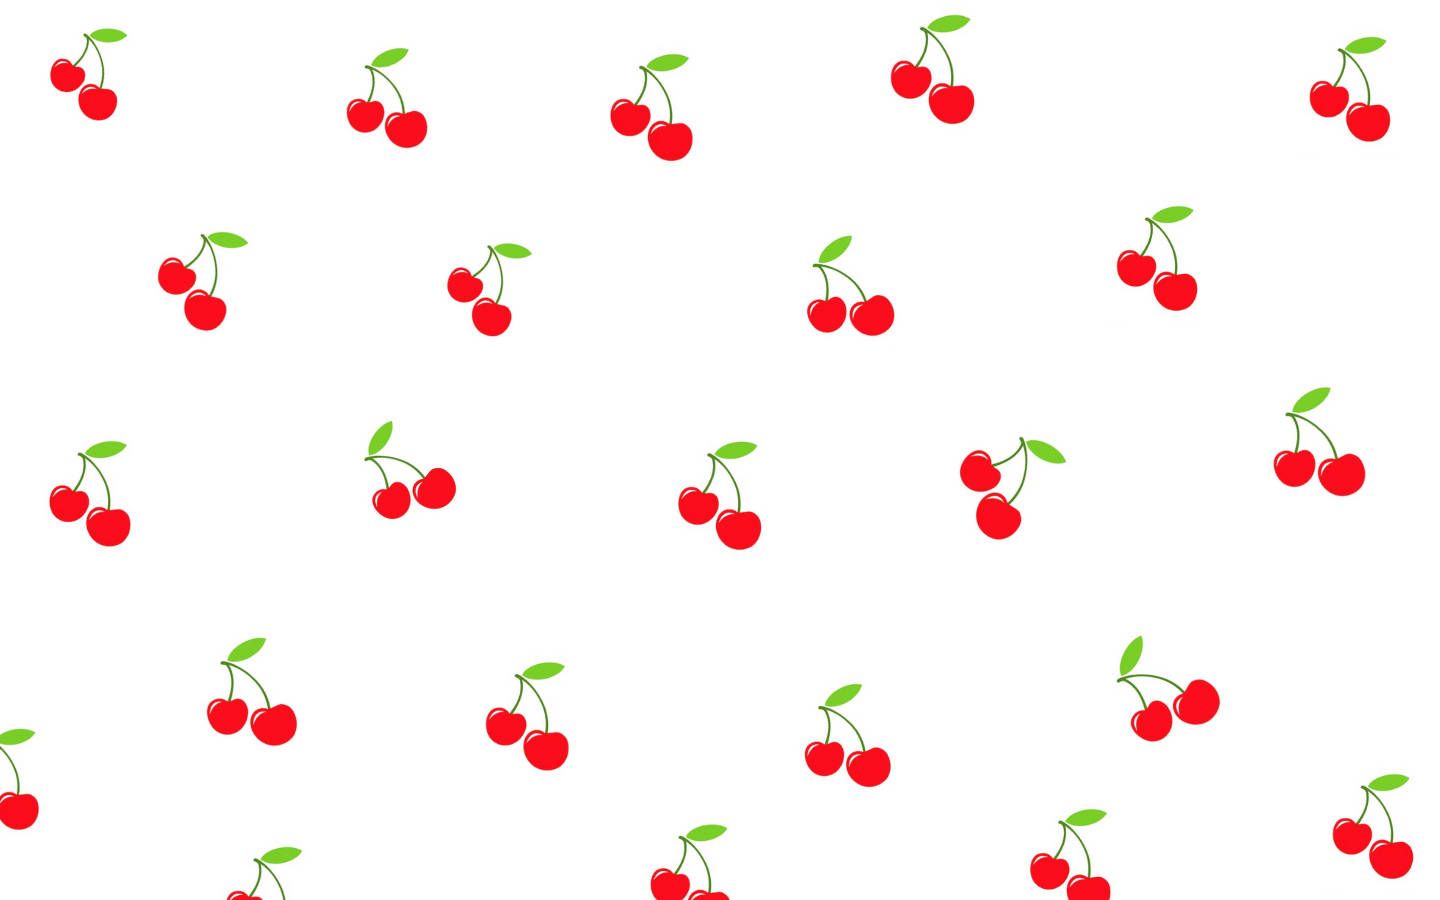 Free Cute Cherry Aesthetic Wallpaper Downloads, Cute Cherry Aesthetic Wallpaper for FREE